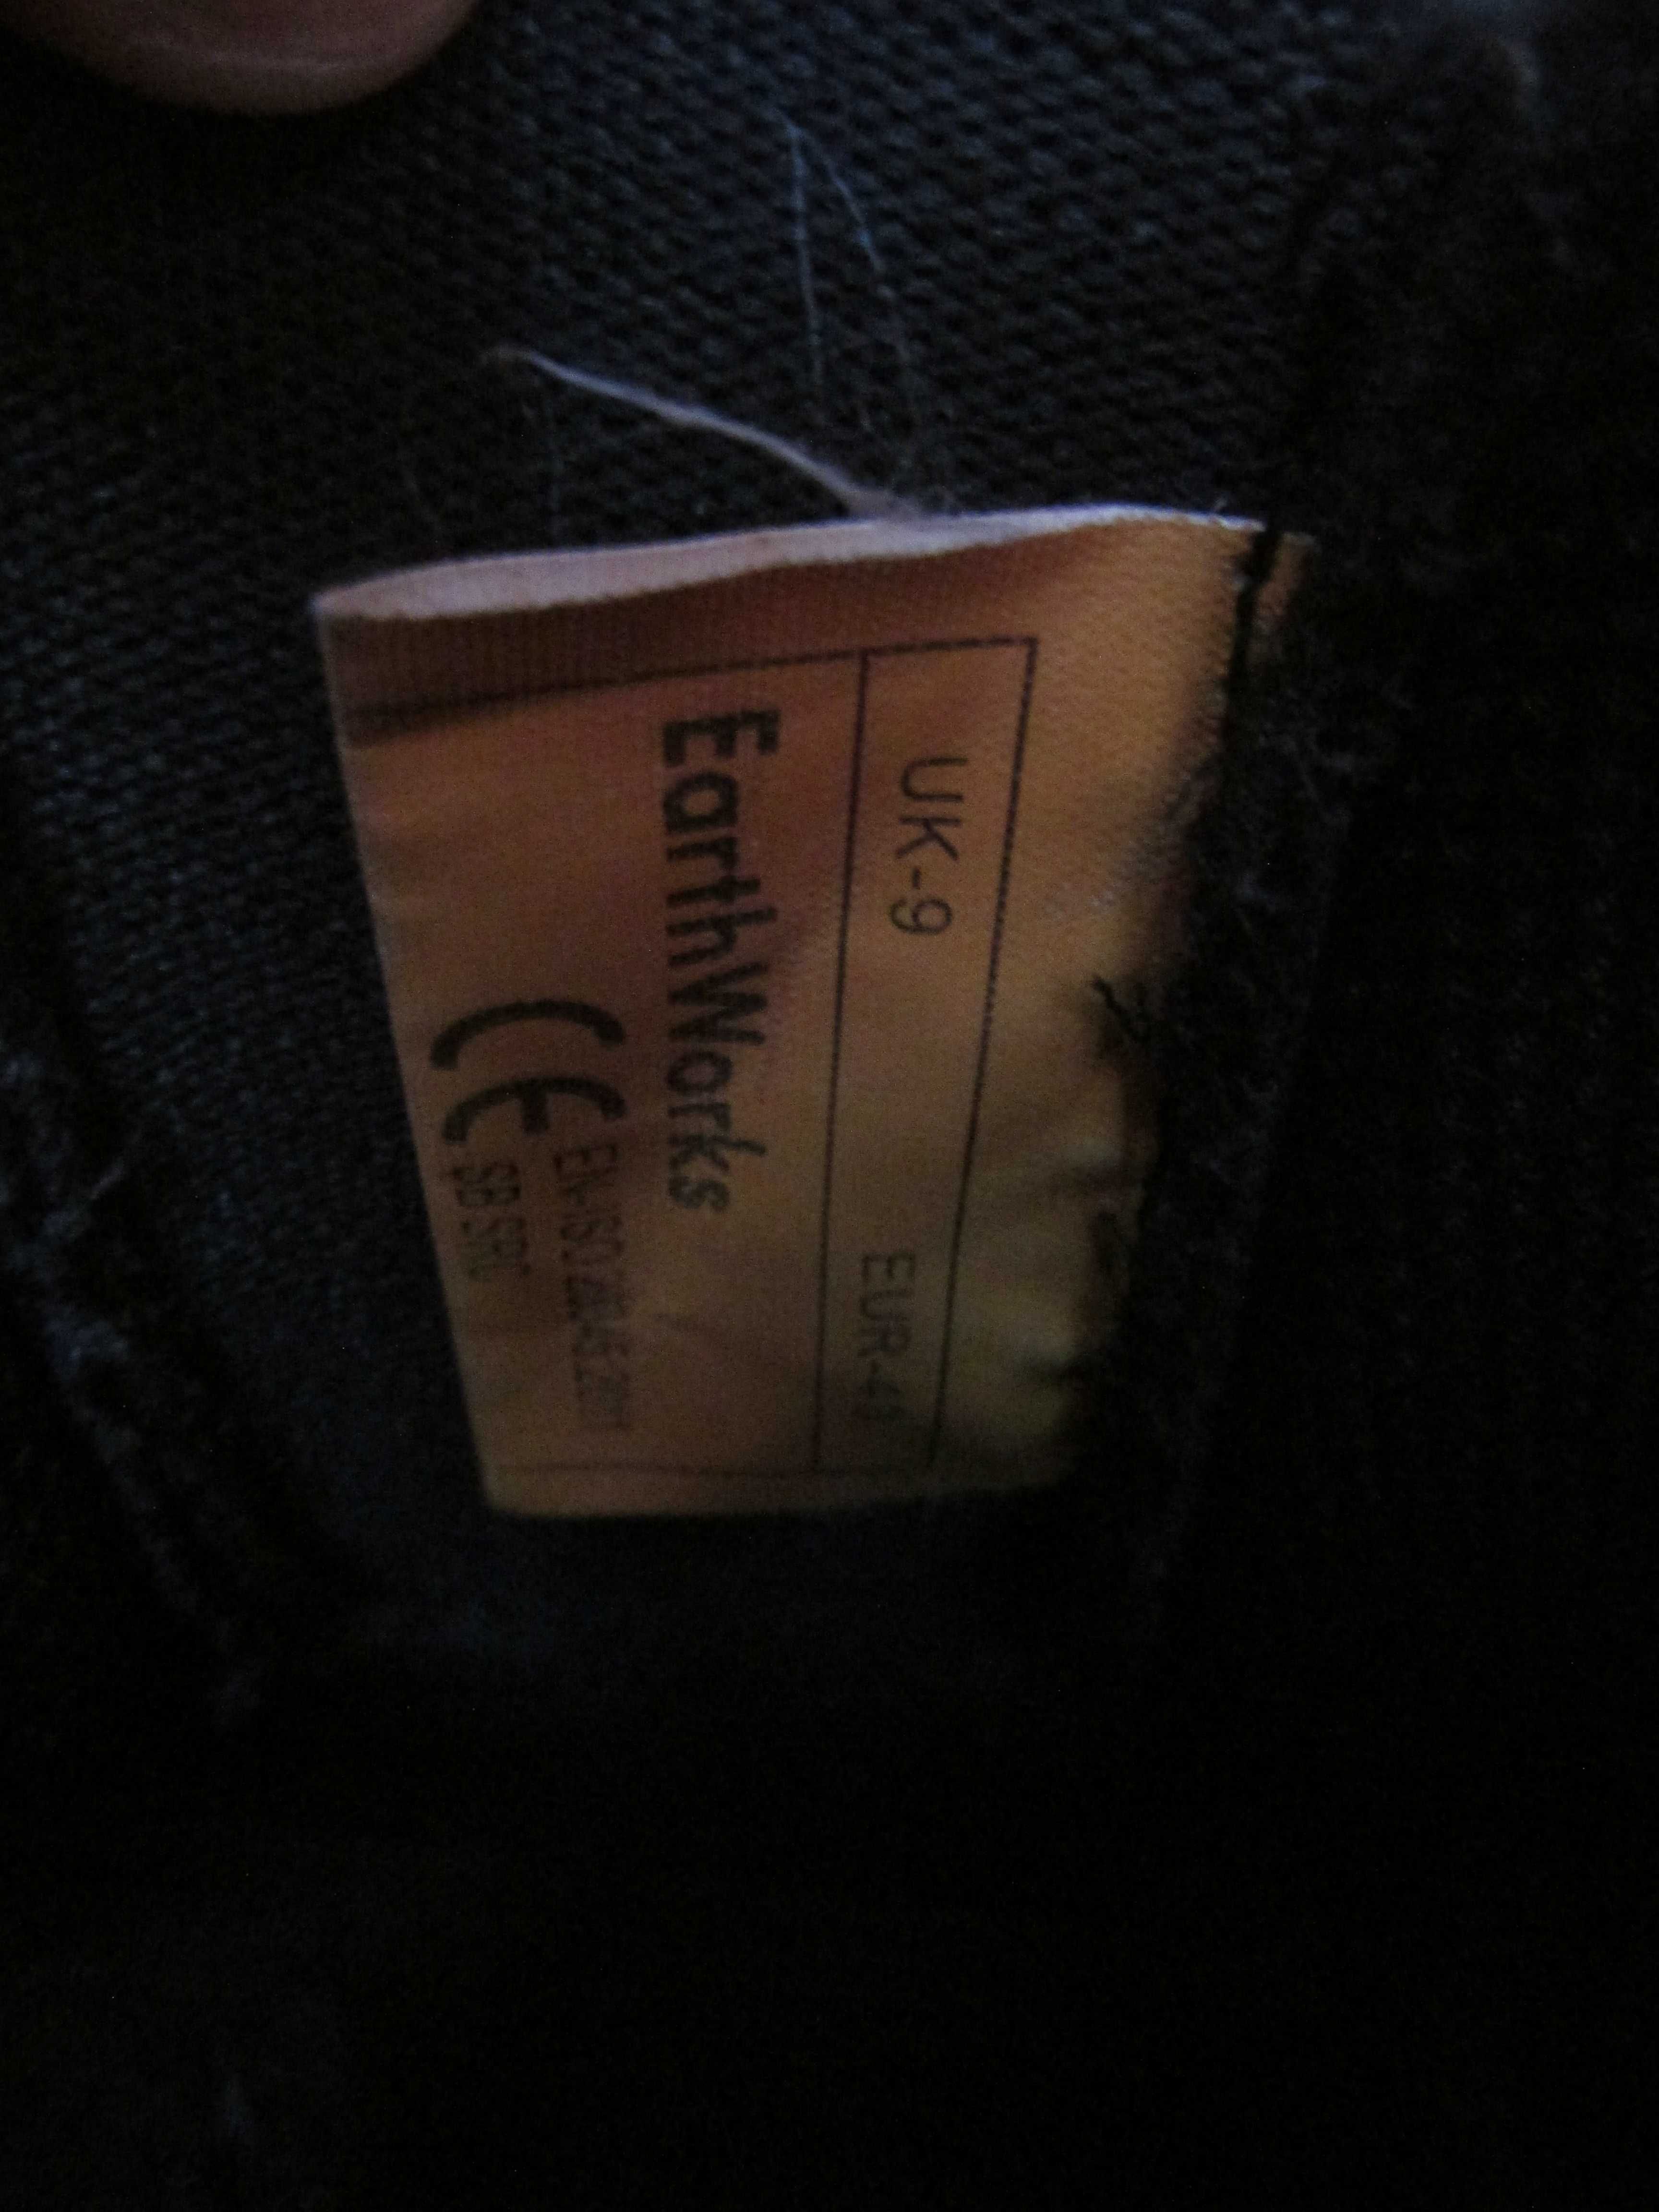 Pantofi/ghete protectia muncii Earthworks,piele,marime 42.5-43 (28 cm)